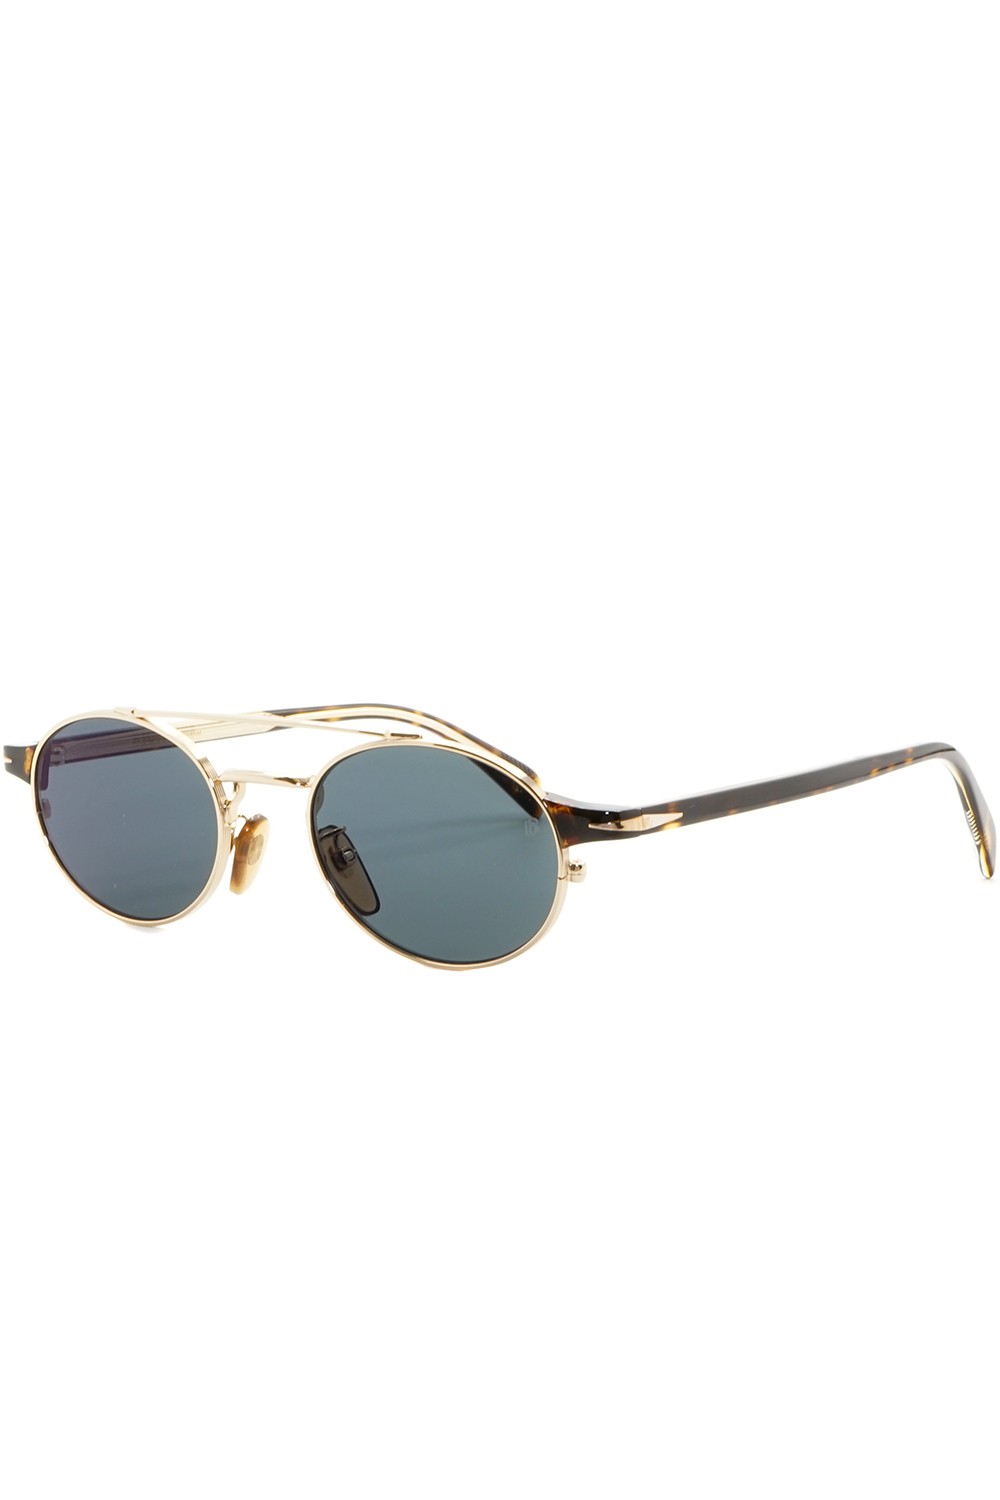 David Beckham Eyewear - Occhiali da sole in metallo ovali per uomo oro -